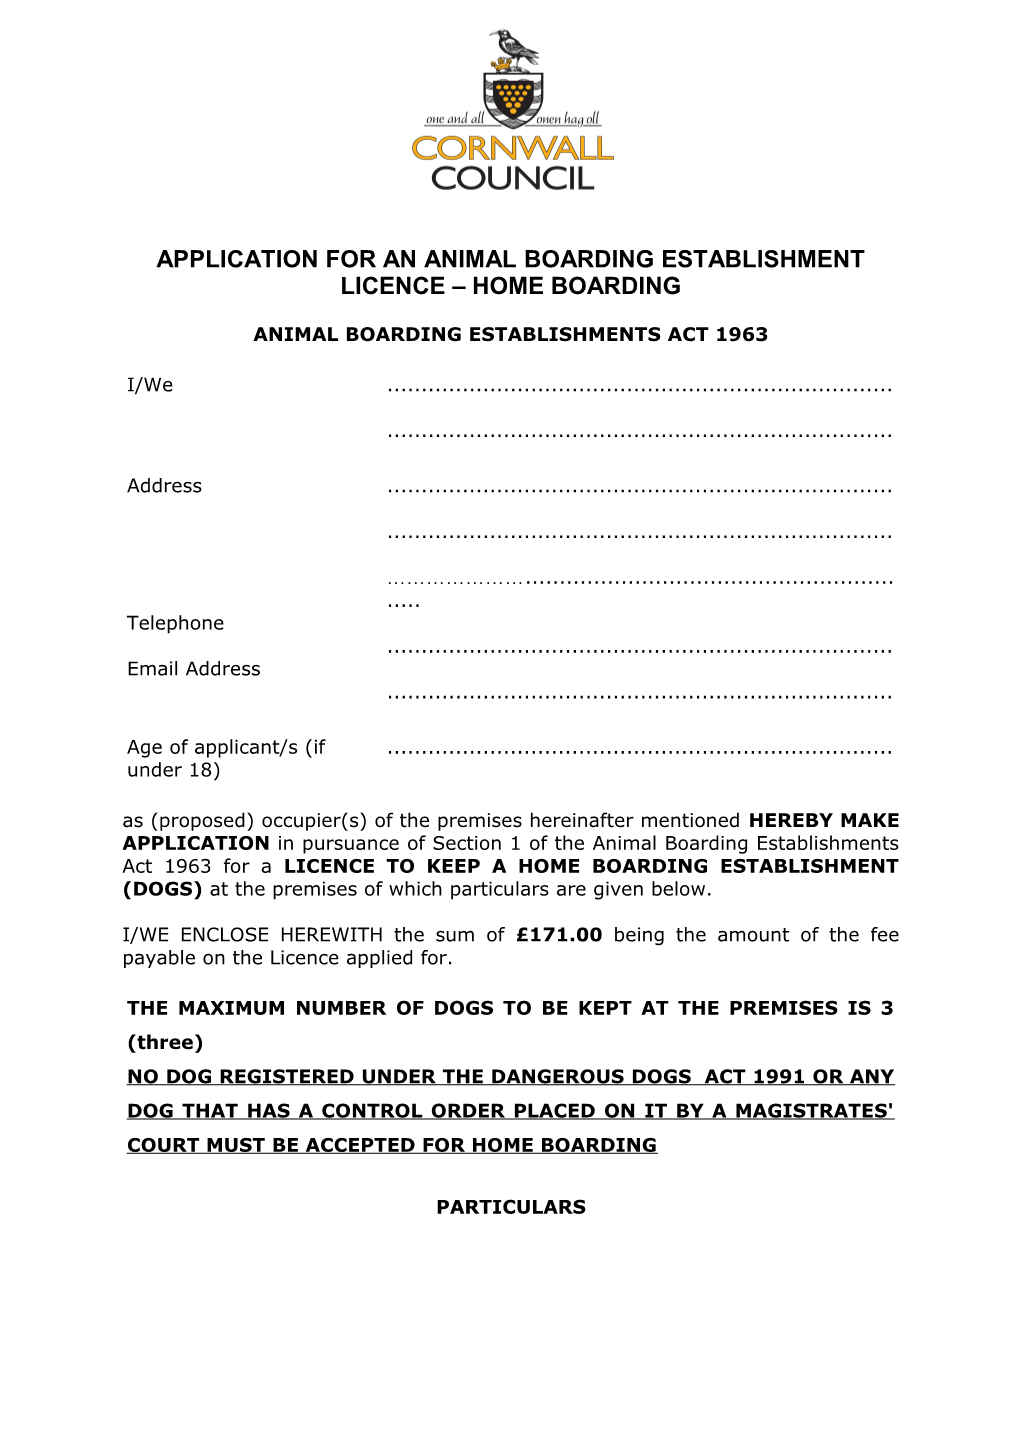 Application for an Animal Boarding Establishment